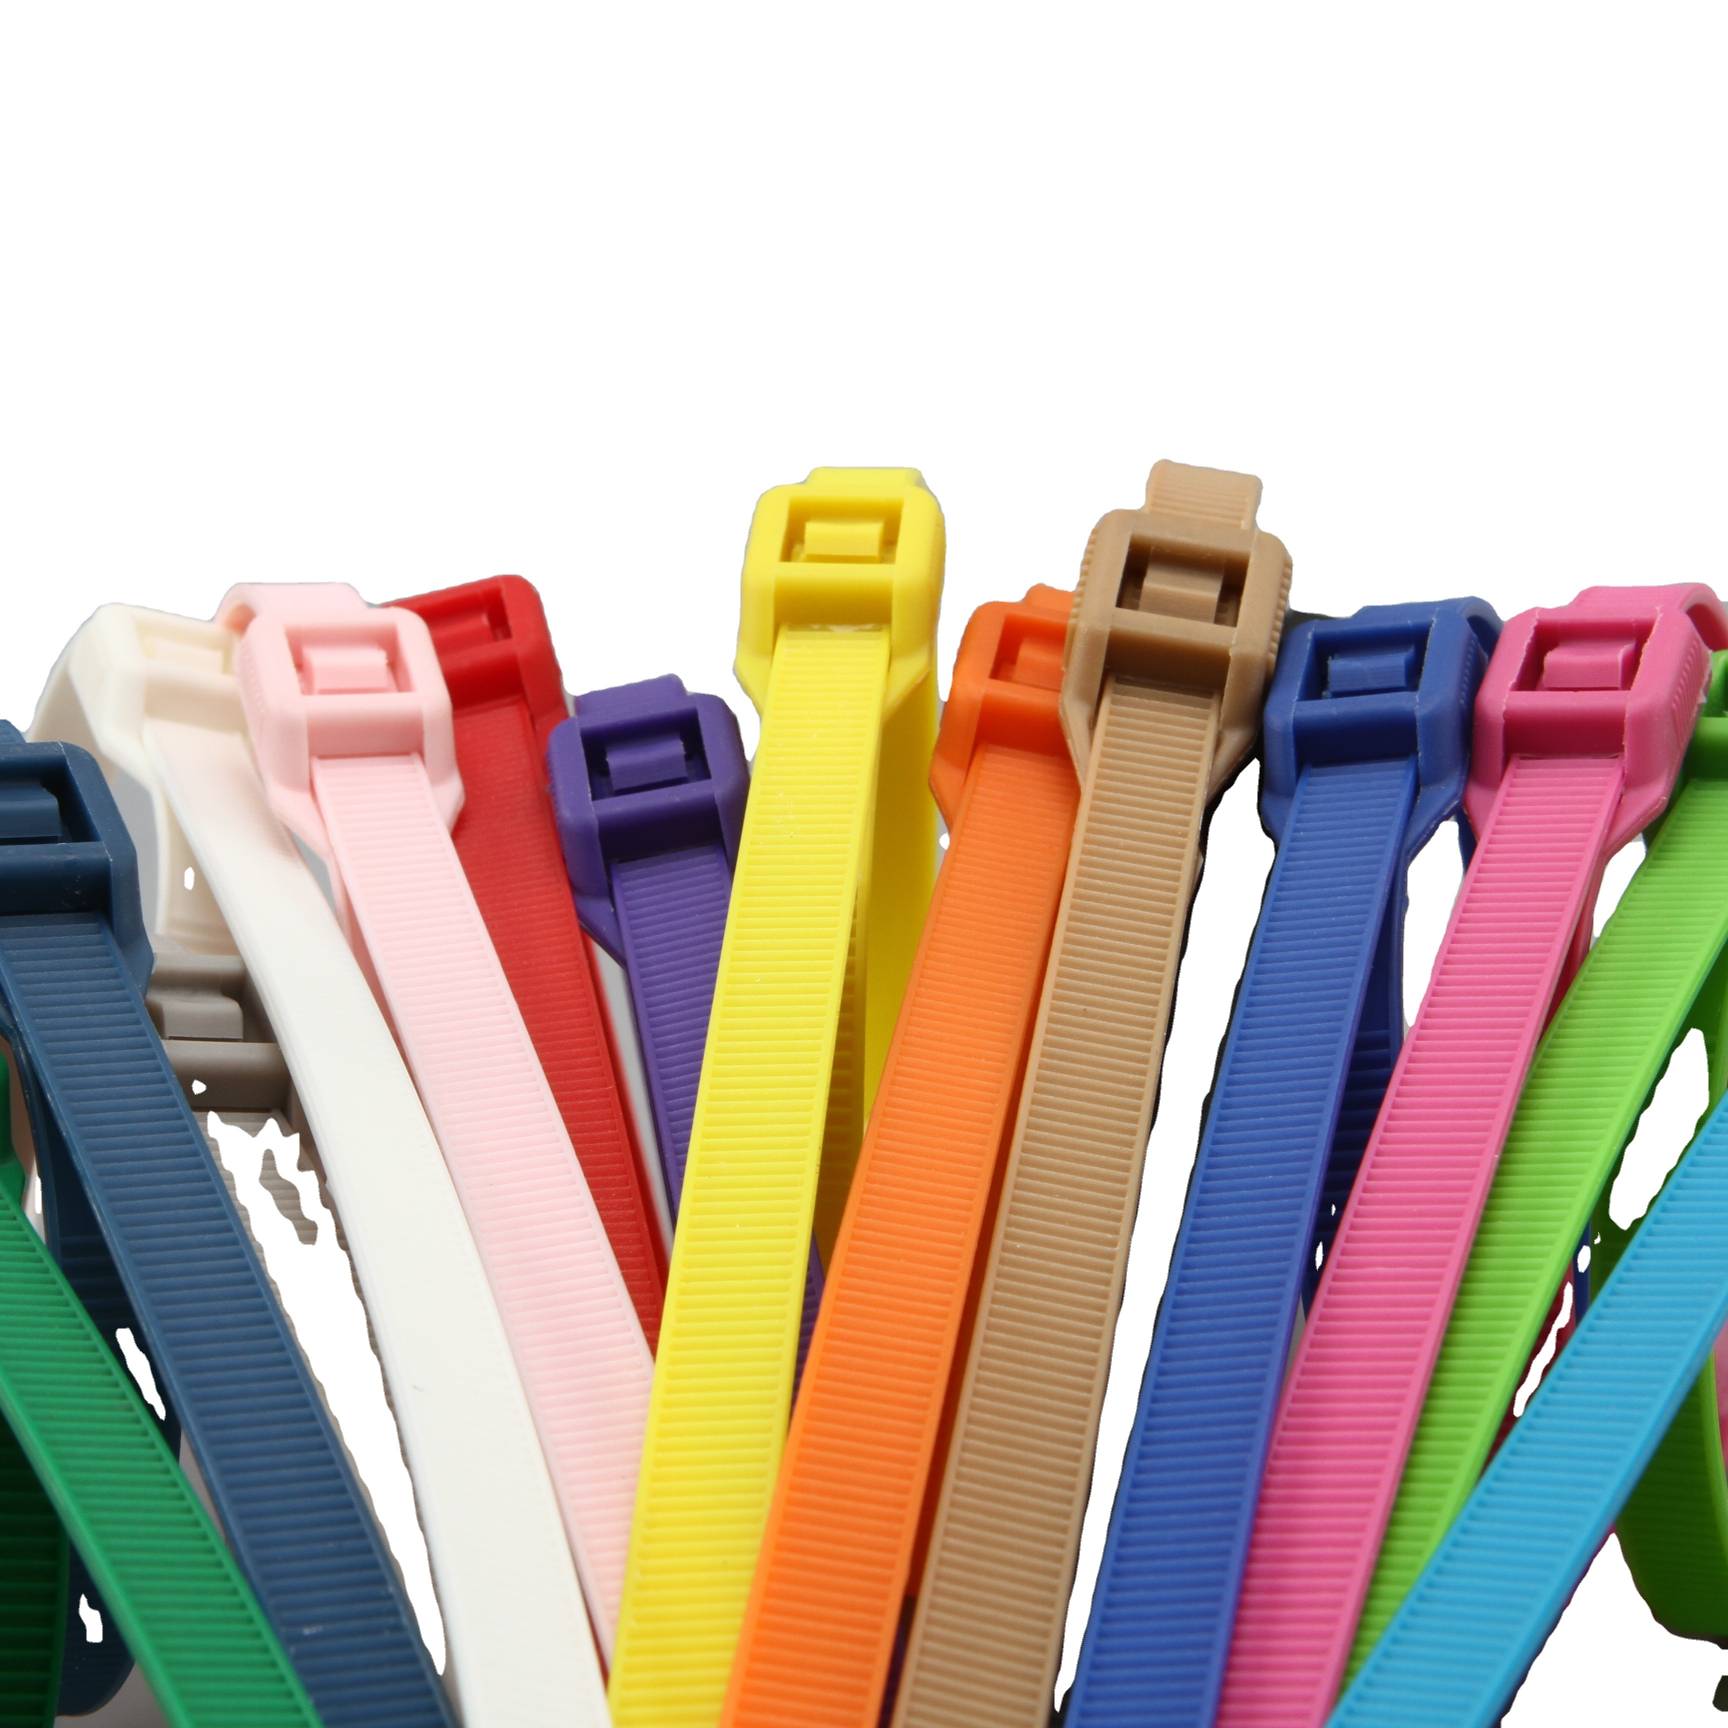 Loose adjustable buckle cable ties